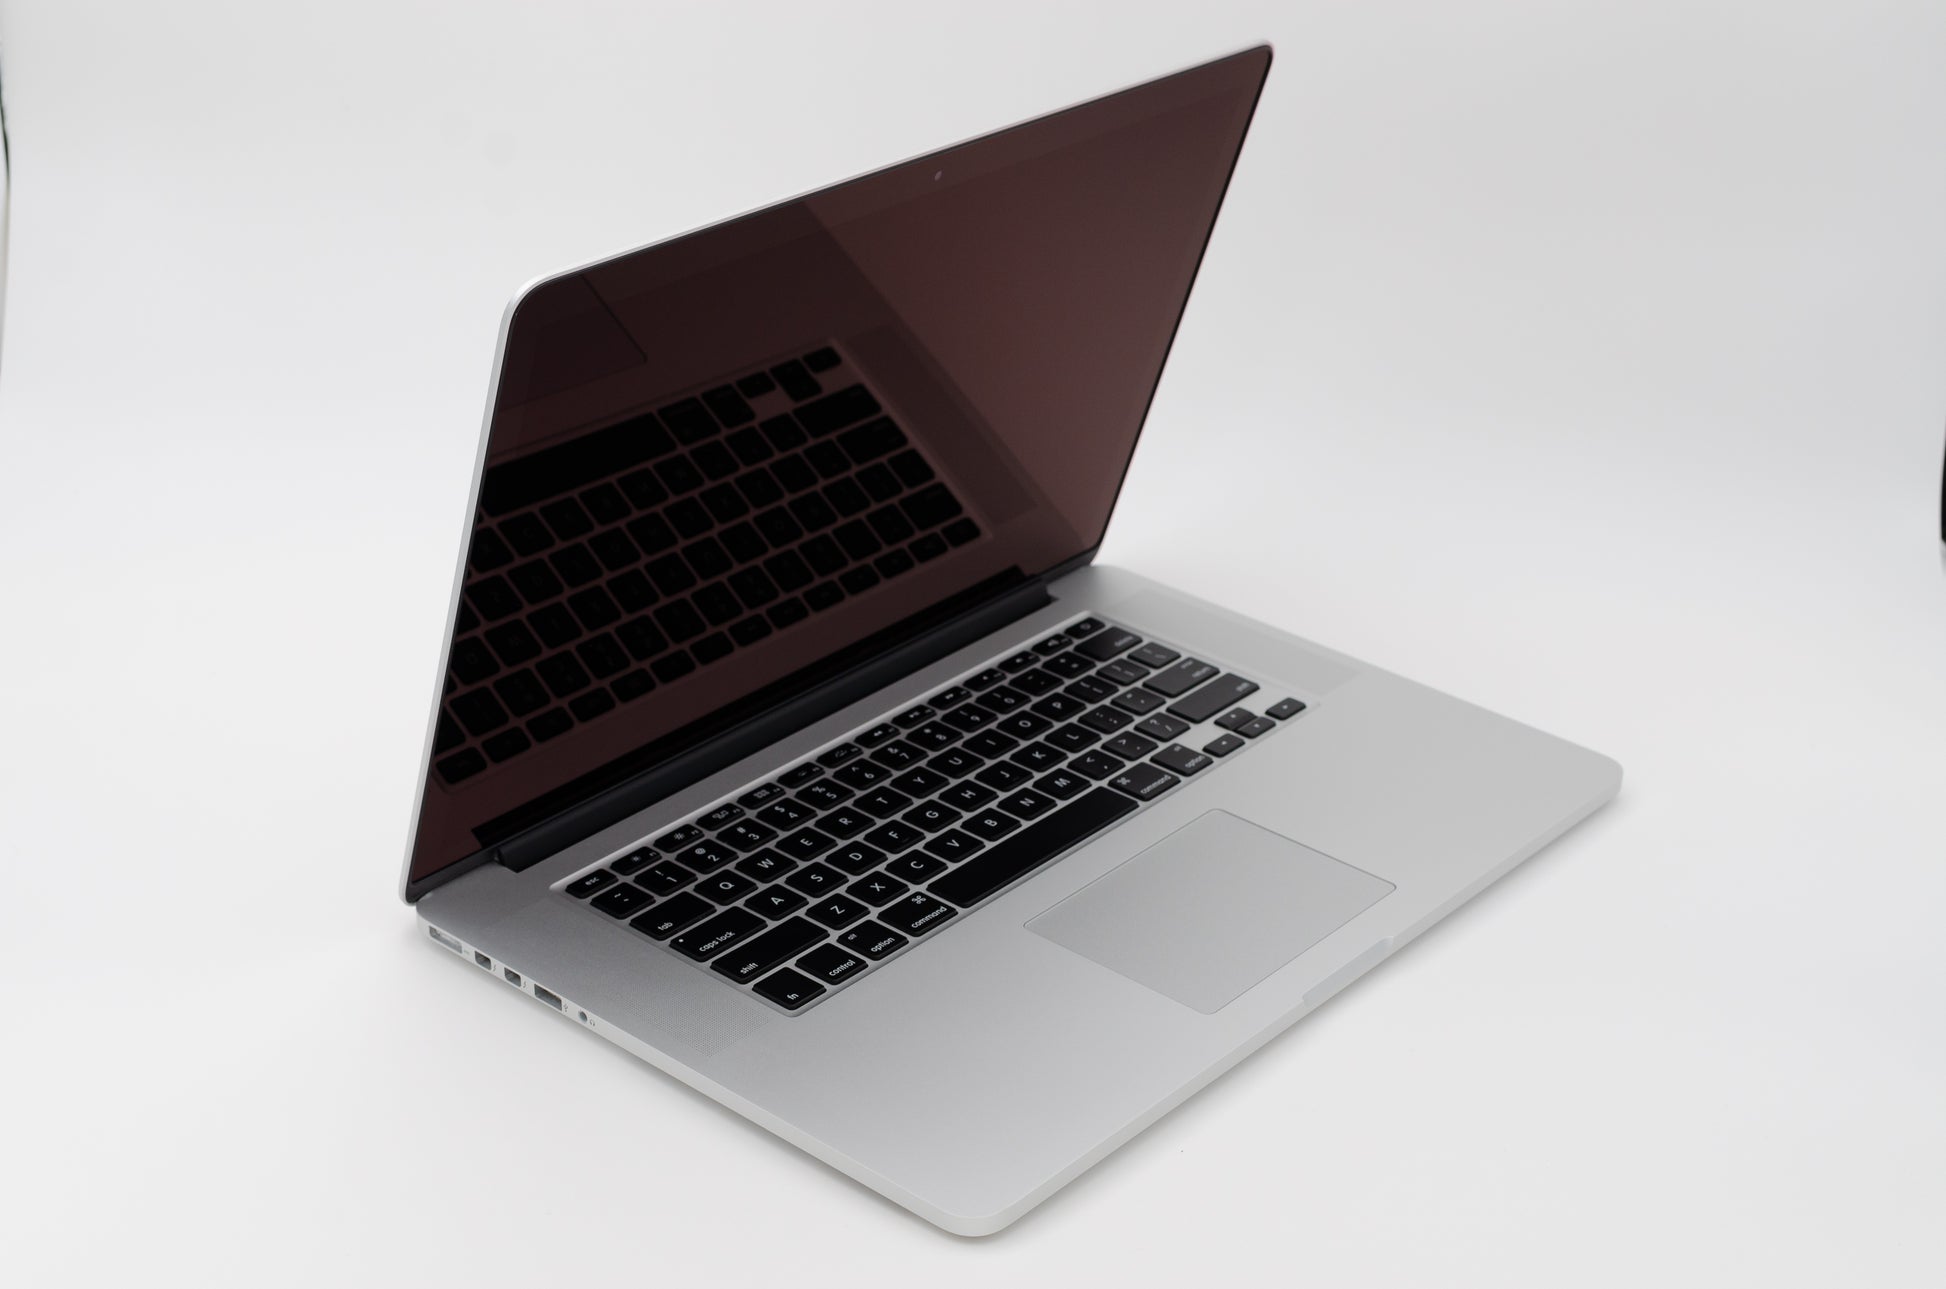 apple-mid-2009-15.4-inch-macbook-pro-a1286-aluminum-c2d - 2.53ghz processor, 4gb ram, 9400m gt - 256mb gpu-mc118ll/a-4